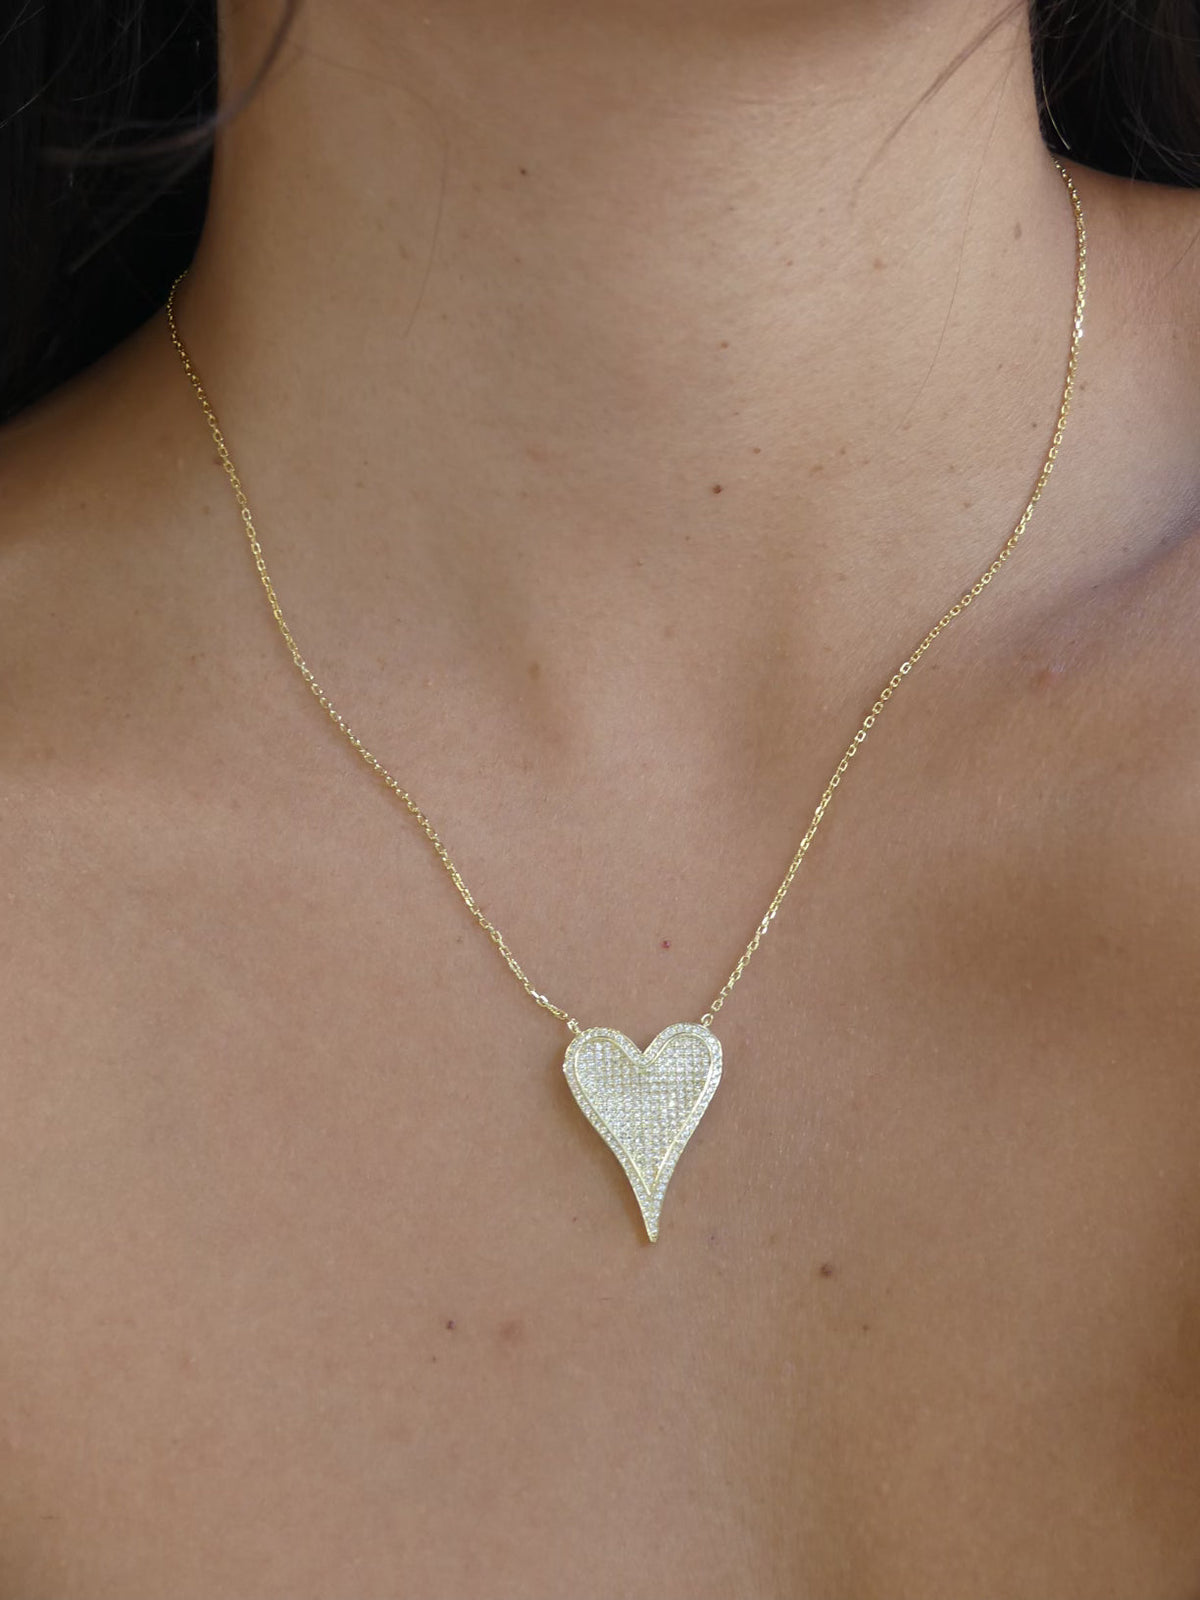 Large Heart Necklace, Pave Diamond CZ Glamorous Girl .925 Sterling Silver Necklace